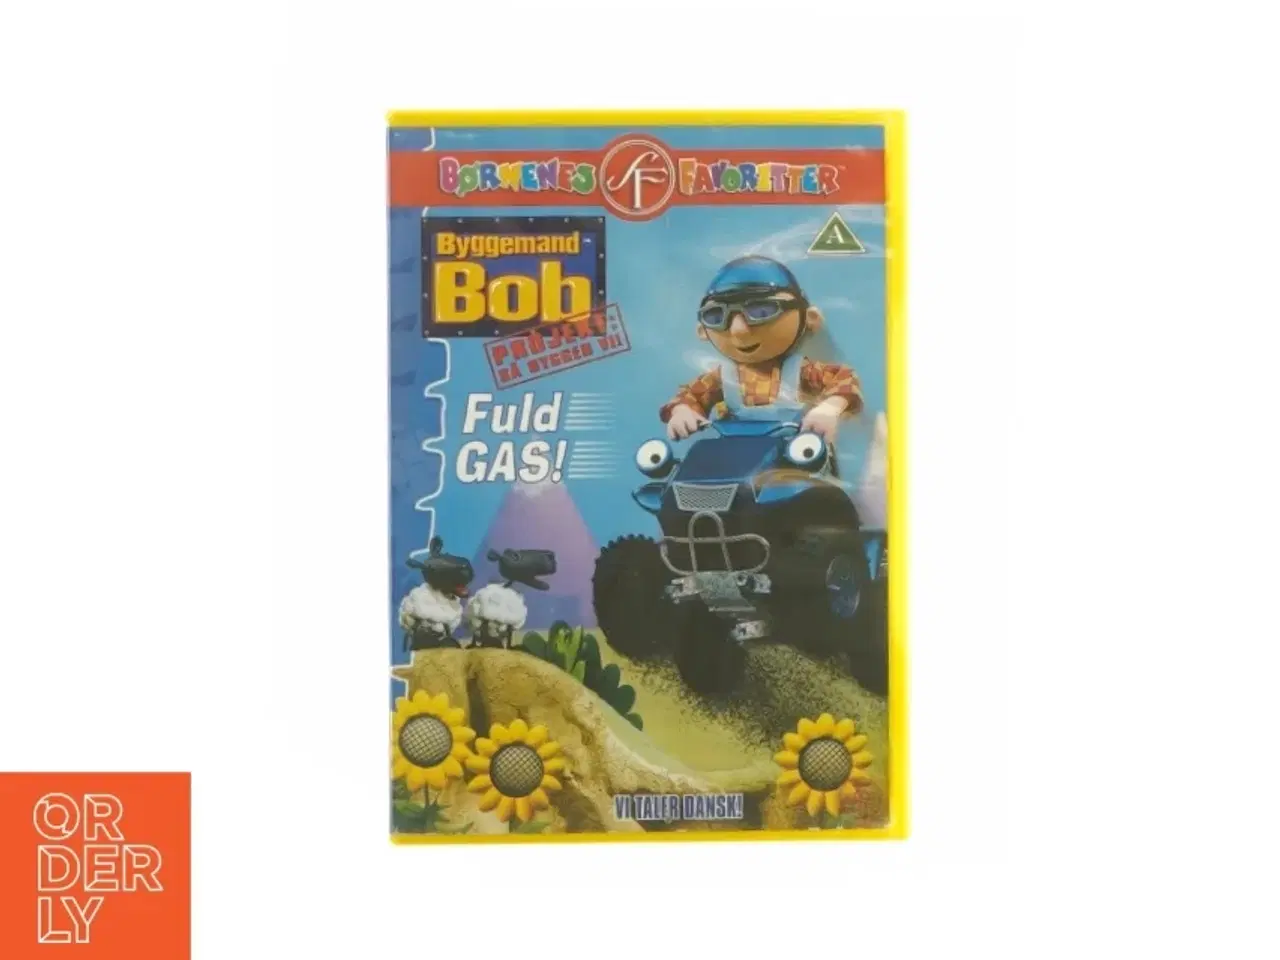 Billede 1 - Byggemand Bob (DVD)